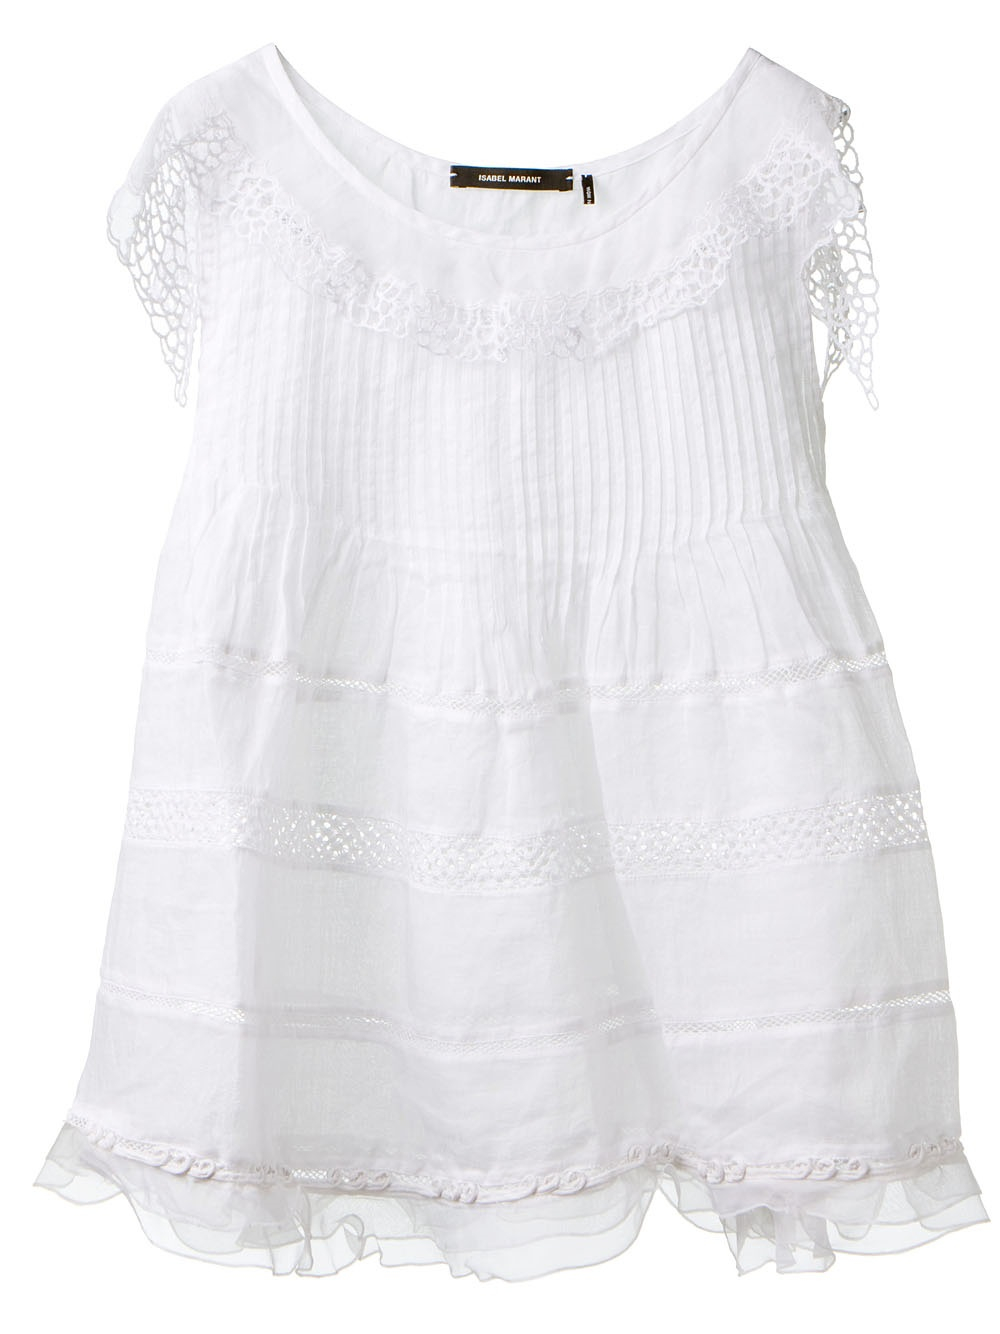 Lyst - Isabel Marant Crochet Top in White